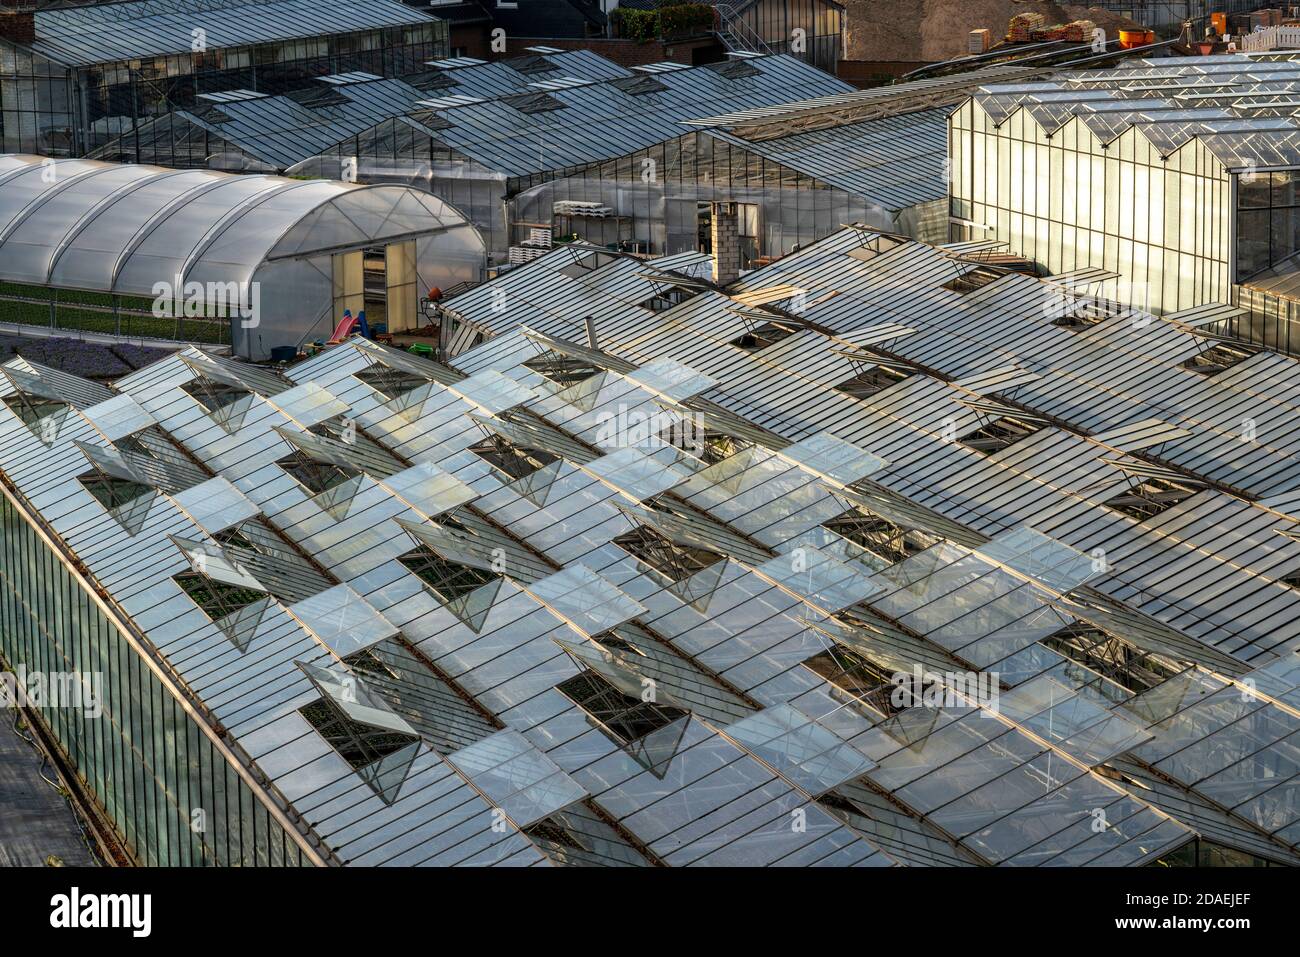 Nursery, plant breeding, glass greenhouses, skylights open, roofs, Düsseldorf-Volmerswerth, Germany, Stock Photo